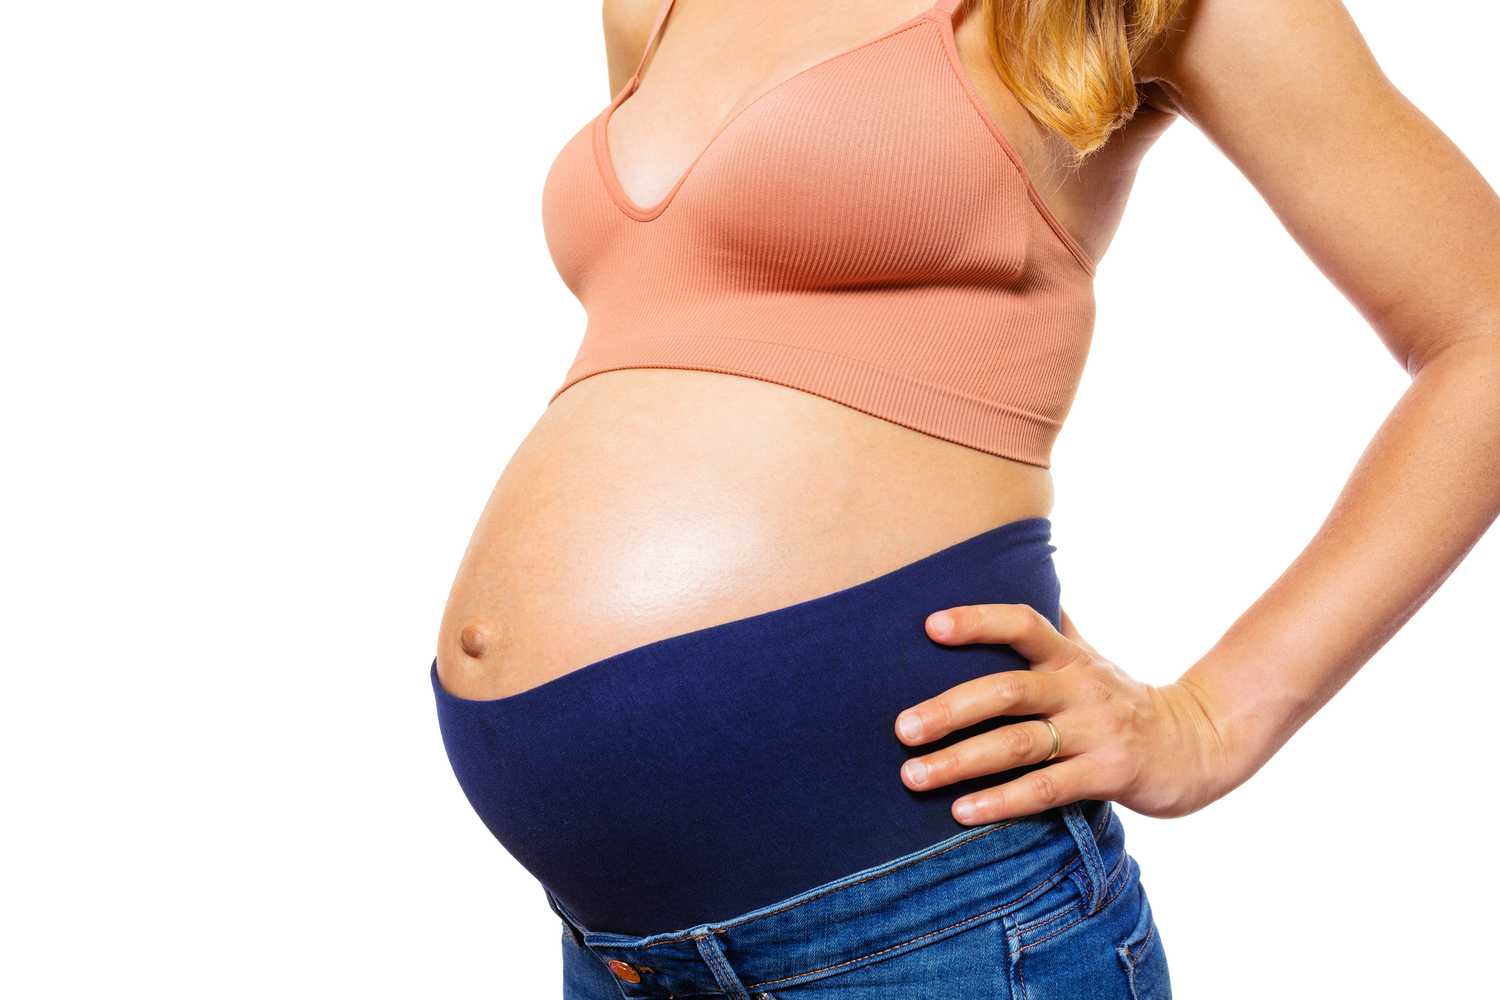 Maternity tummy sleeve during pregnancy